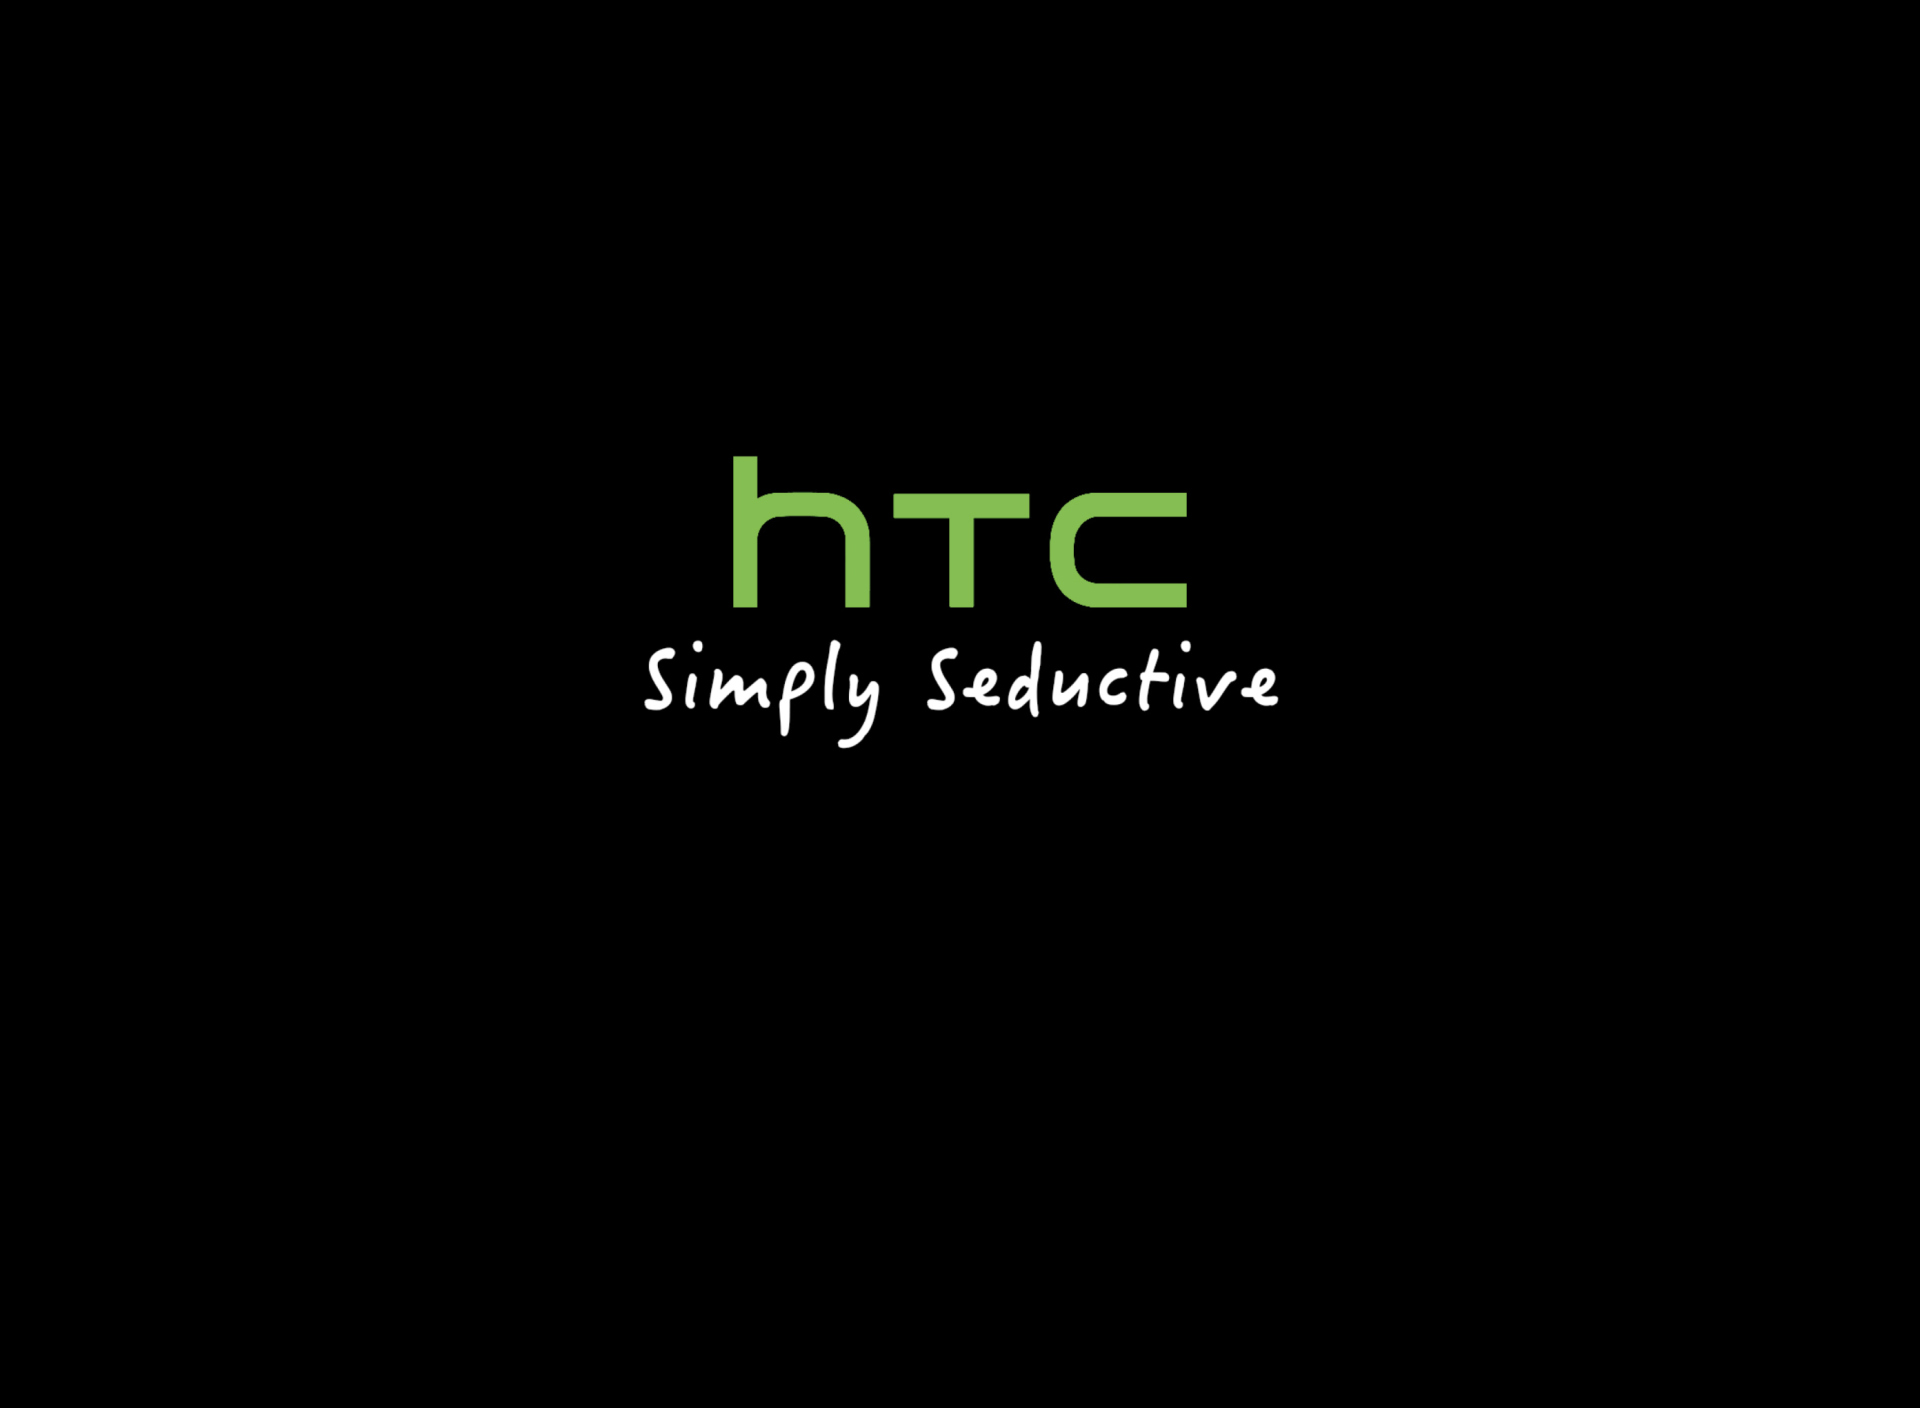 HTC - Simply Seductive screenshot #1 1920x1408